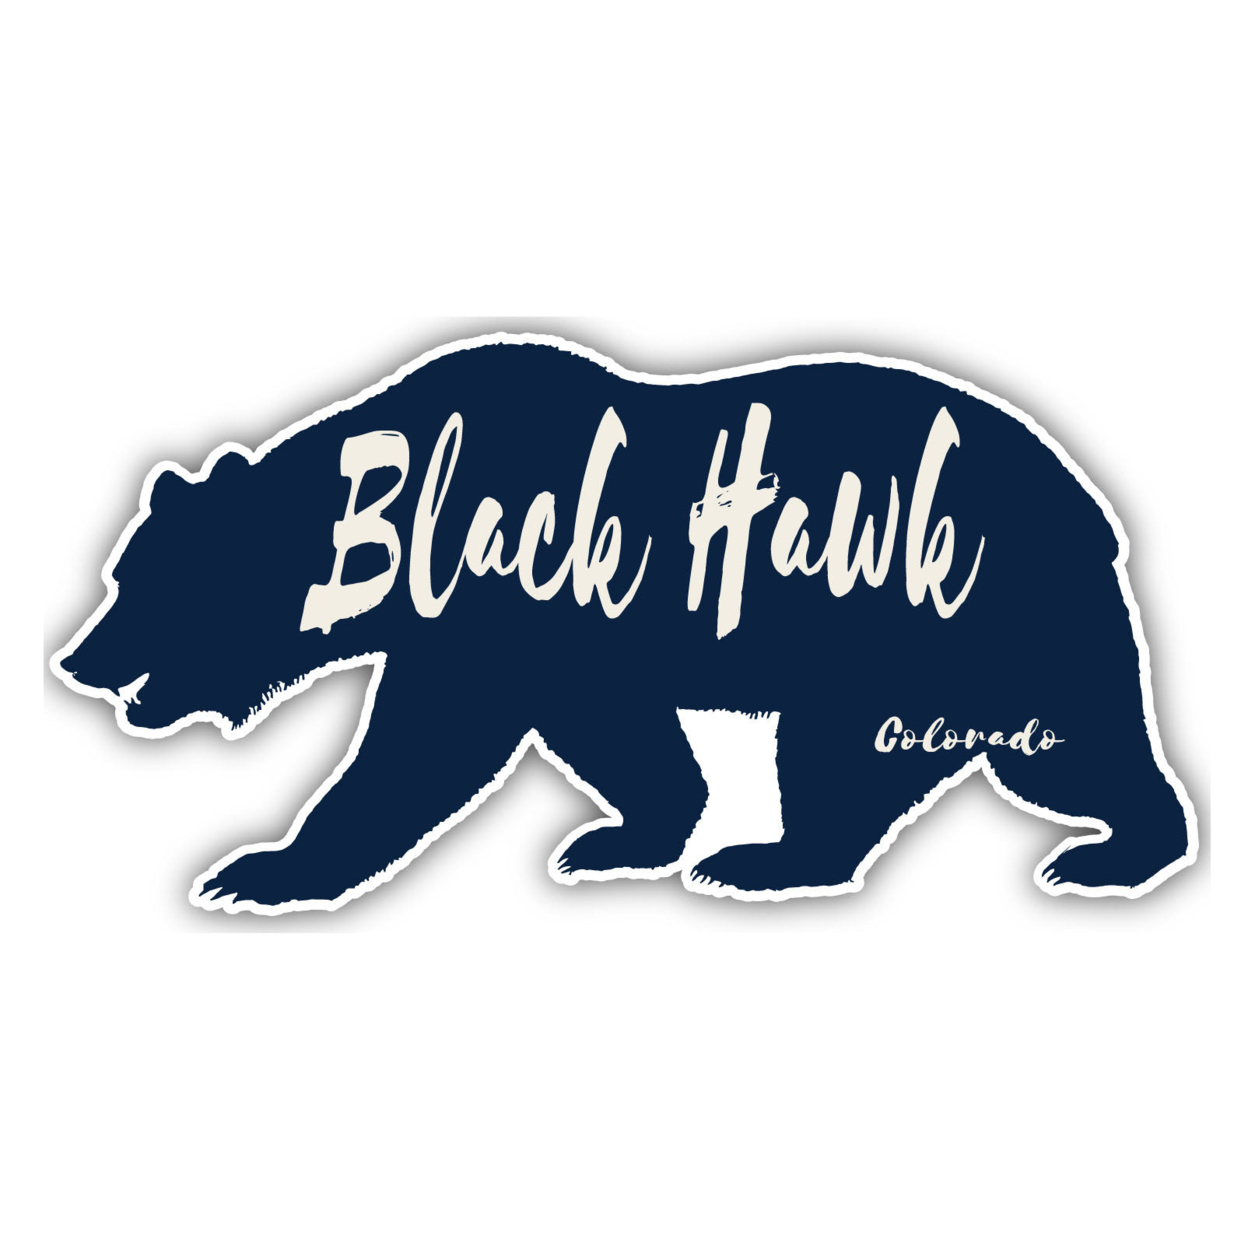 Black Hawk Colorado Souvenir Decorative Stickers (Choose Theme And Size) - 4-Pack, 12-Inch, Tent